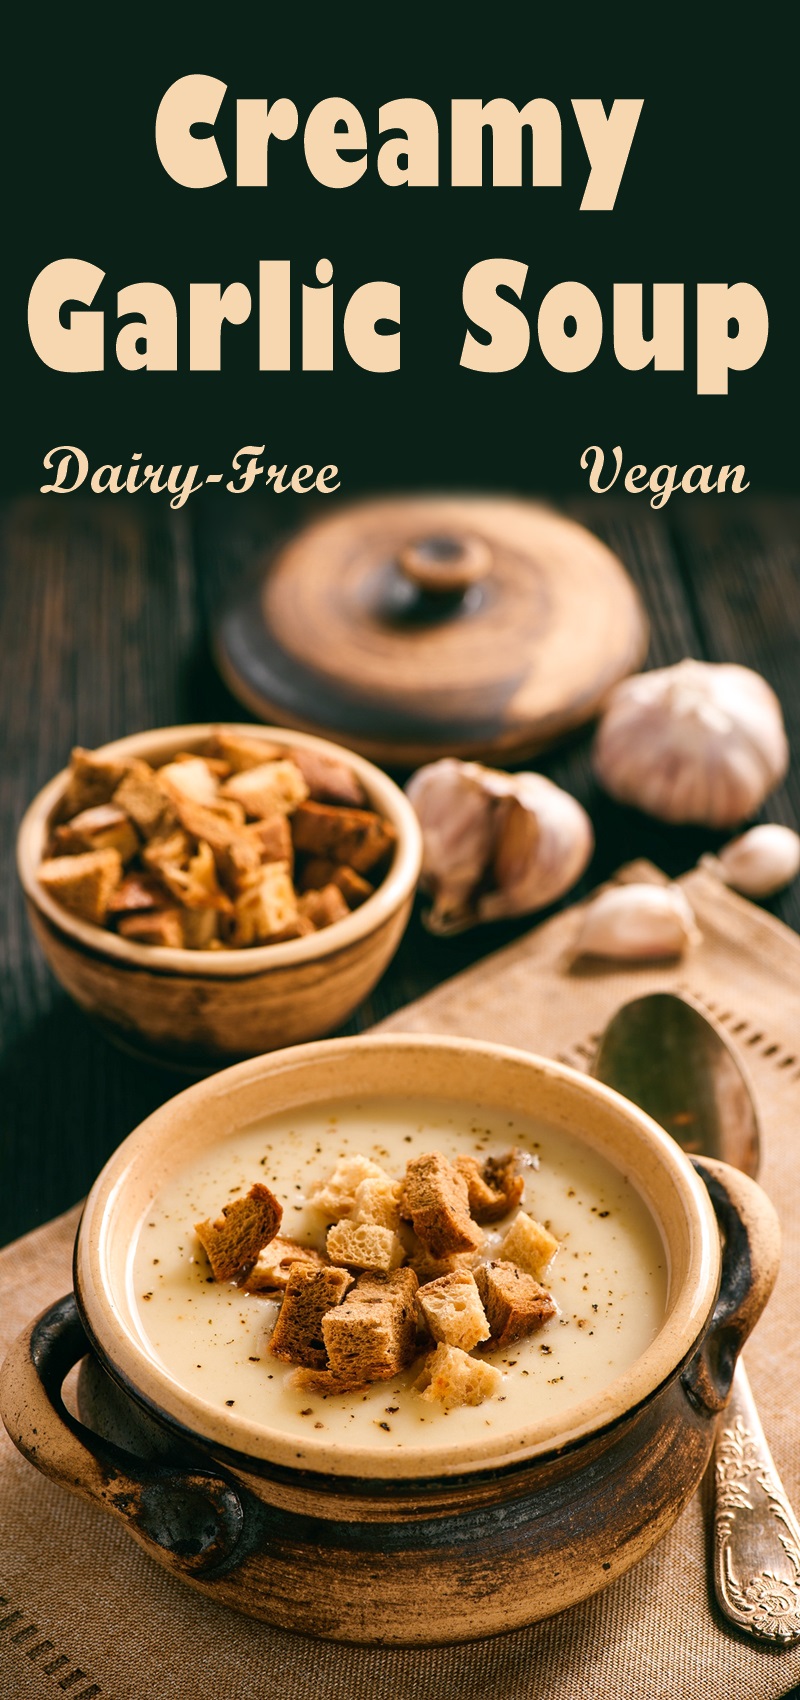 Creamy Garlic Soup Recipe - Dairy-Free and Vegan!